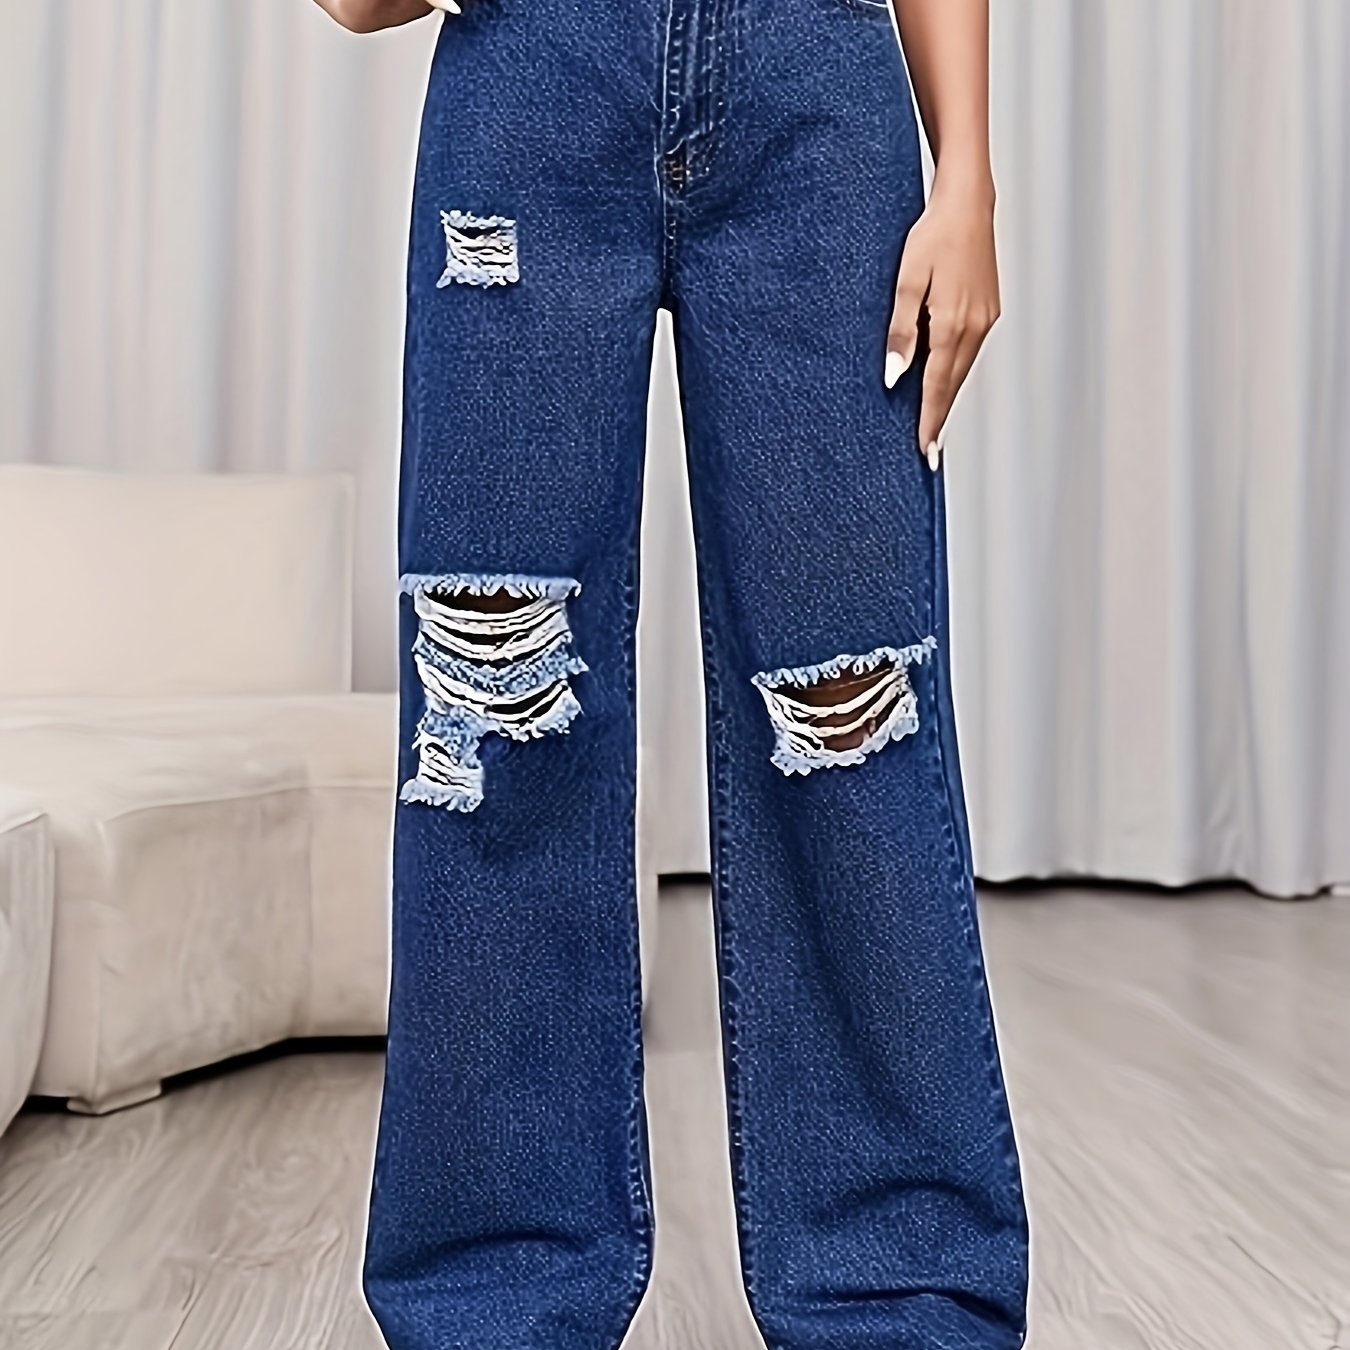 Ripped Grommet Buckle Detail Skinny Jeans, Solid Black High Strech  Eye-catching Denim Pants, Women's Denim Jeans & Clothing